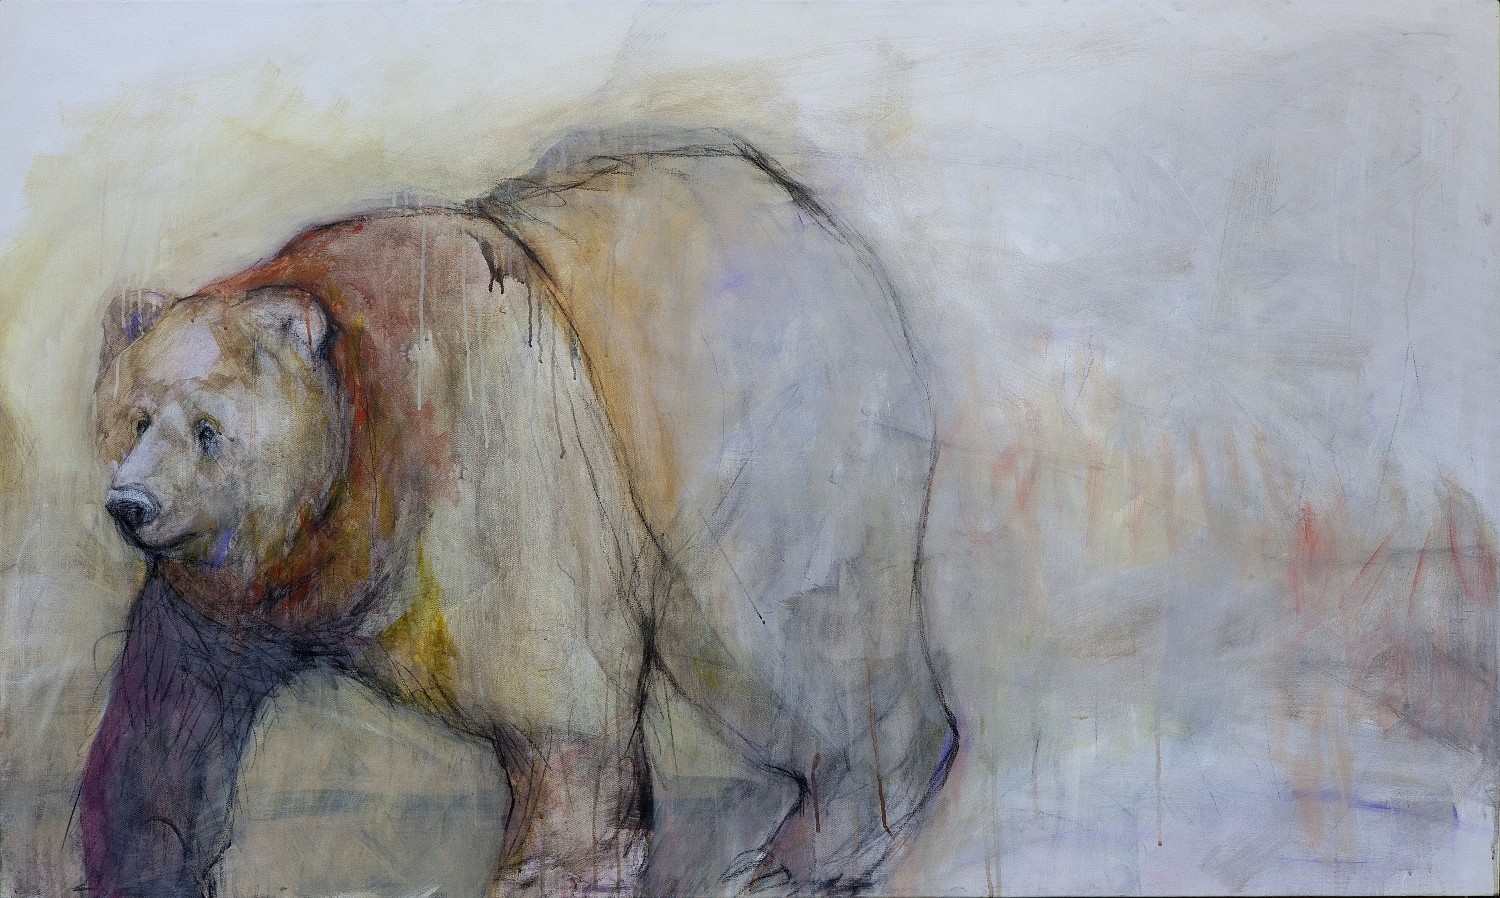 Helen Durant, Spirit Bear, 2018
Acrylic and Charcoal on Canvas, 36 x 60 in.
&bull;